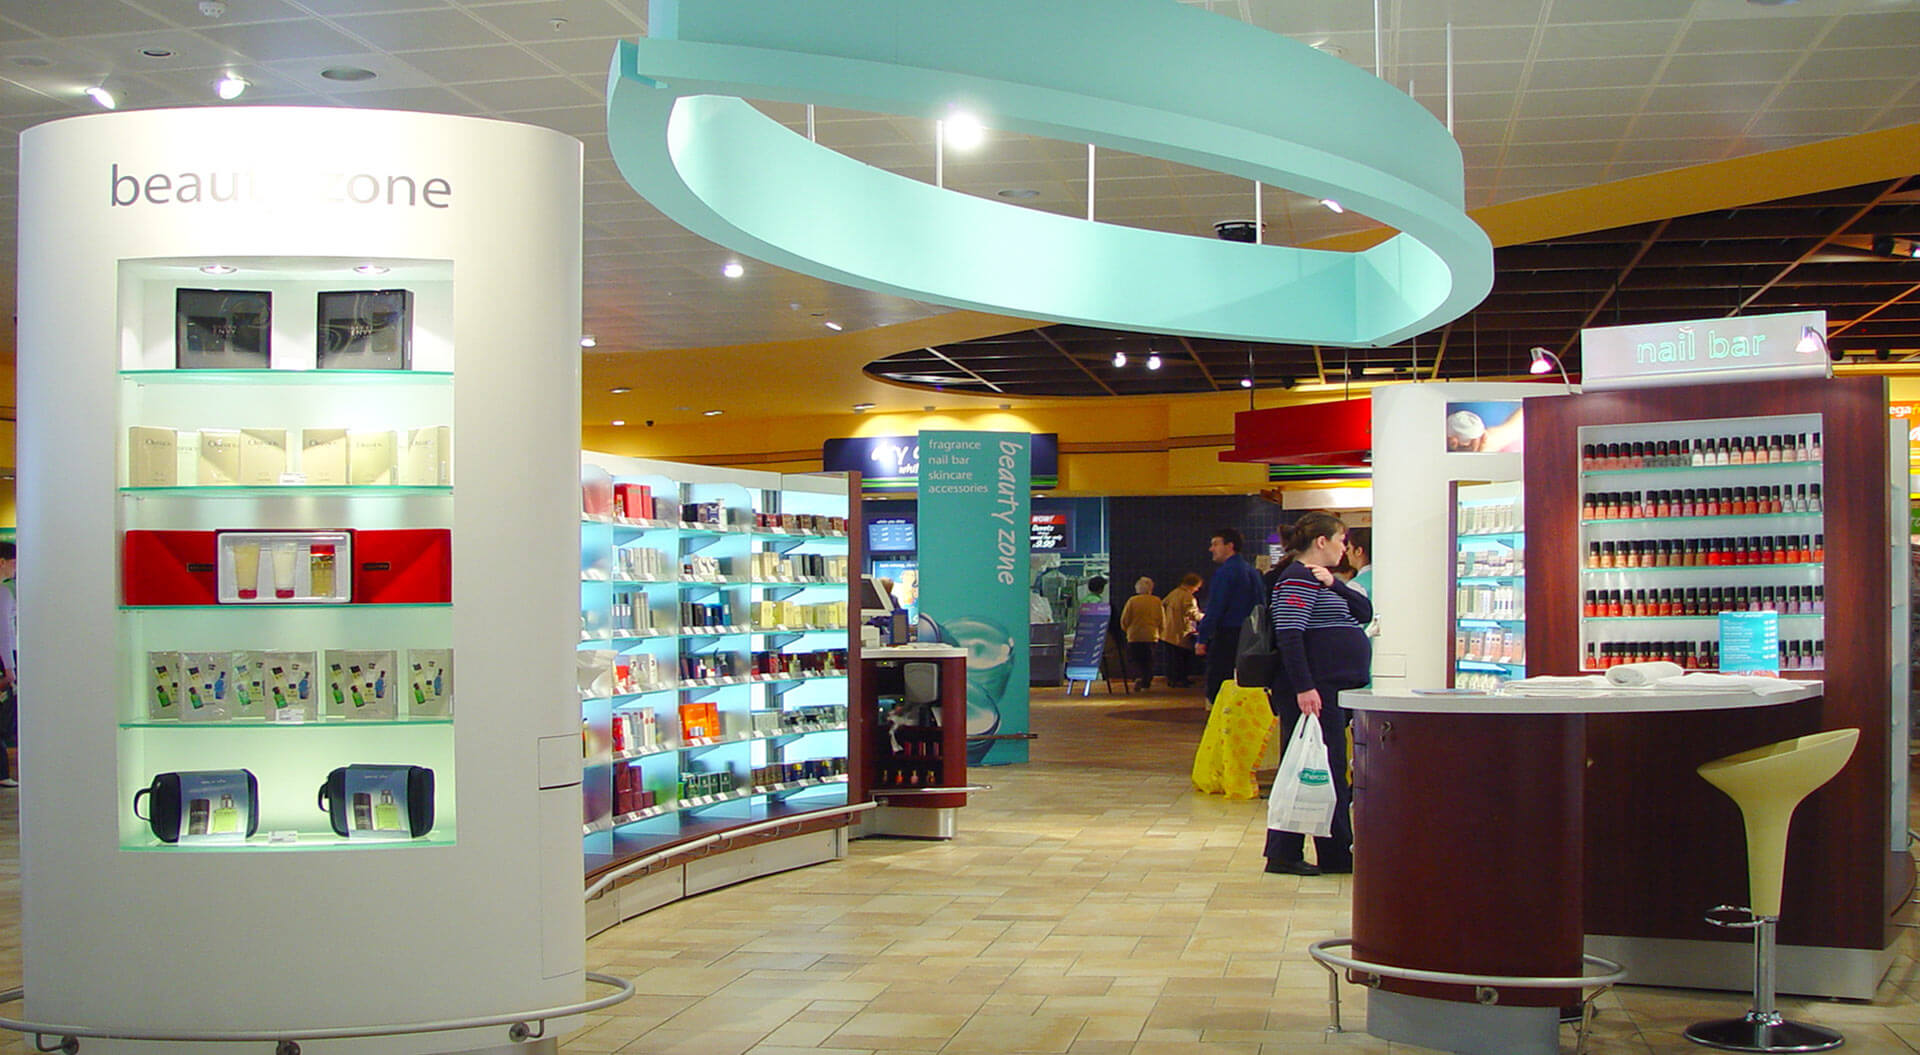 Safeway Mega store hypermarket health and beauty department merchanding display and grapghic branding